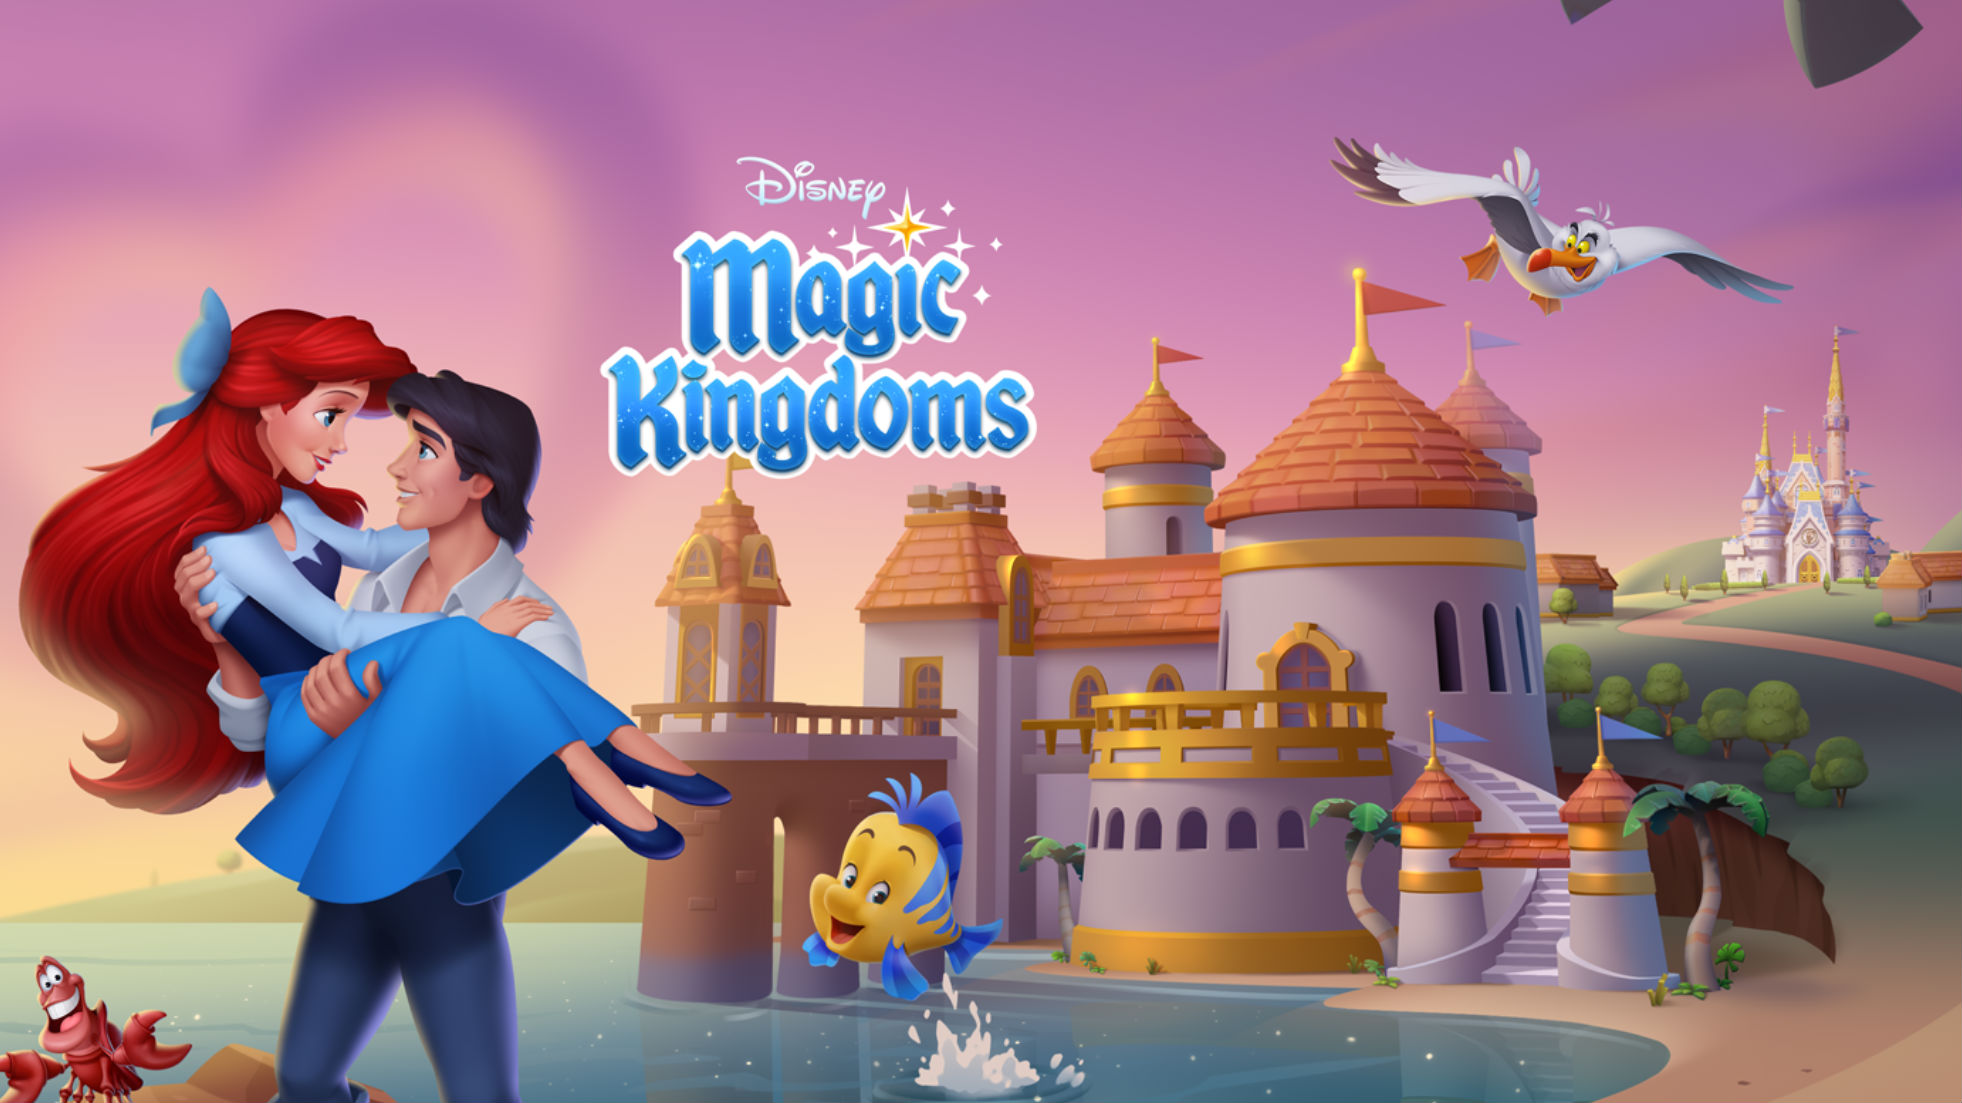 Disney Magic Kingdoms: How to Get More Gems for Free